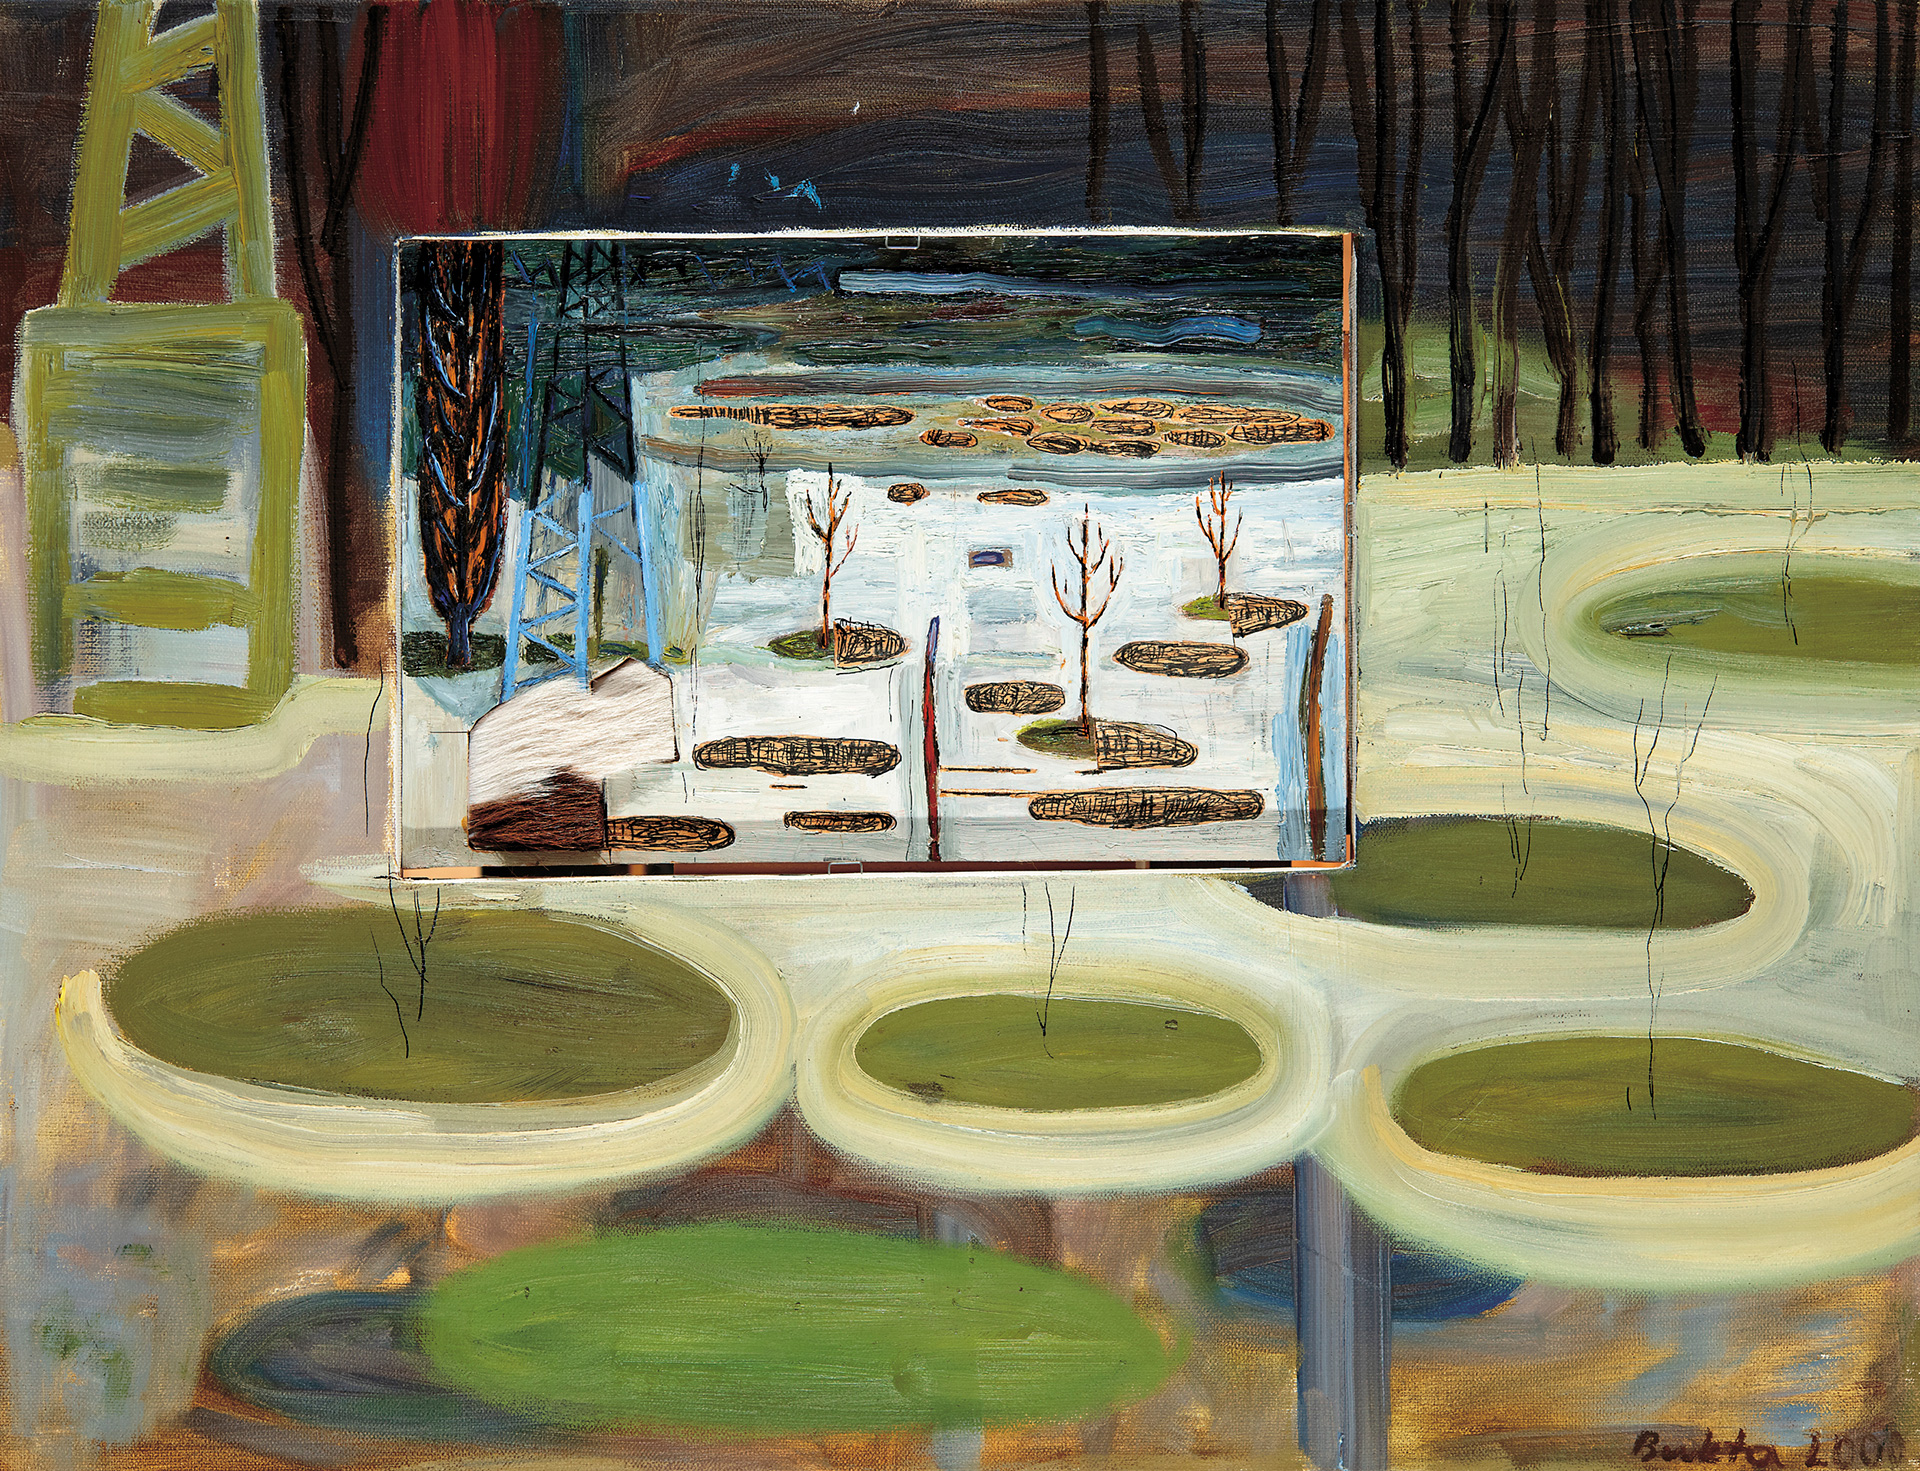 Bukta Imre (1952-) Electric Landscape, 2000